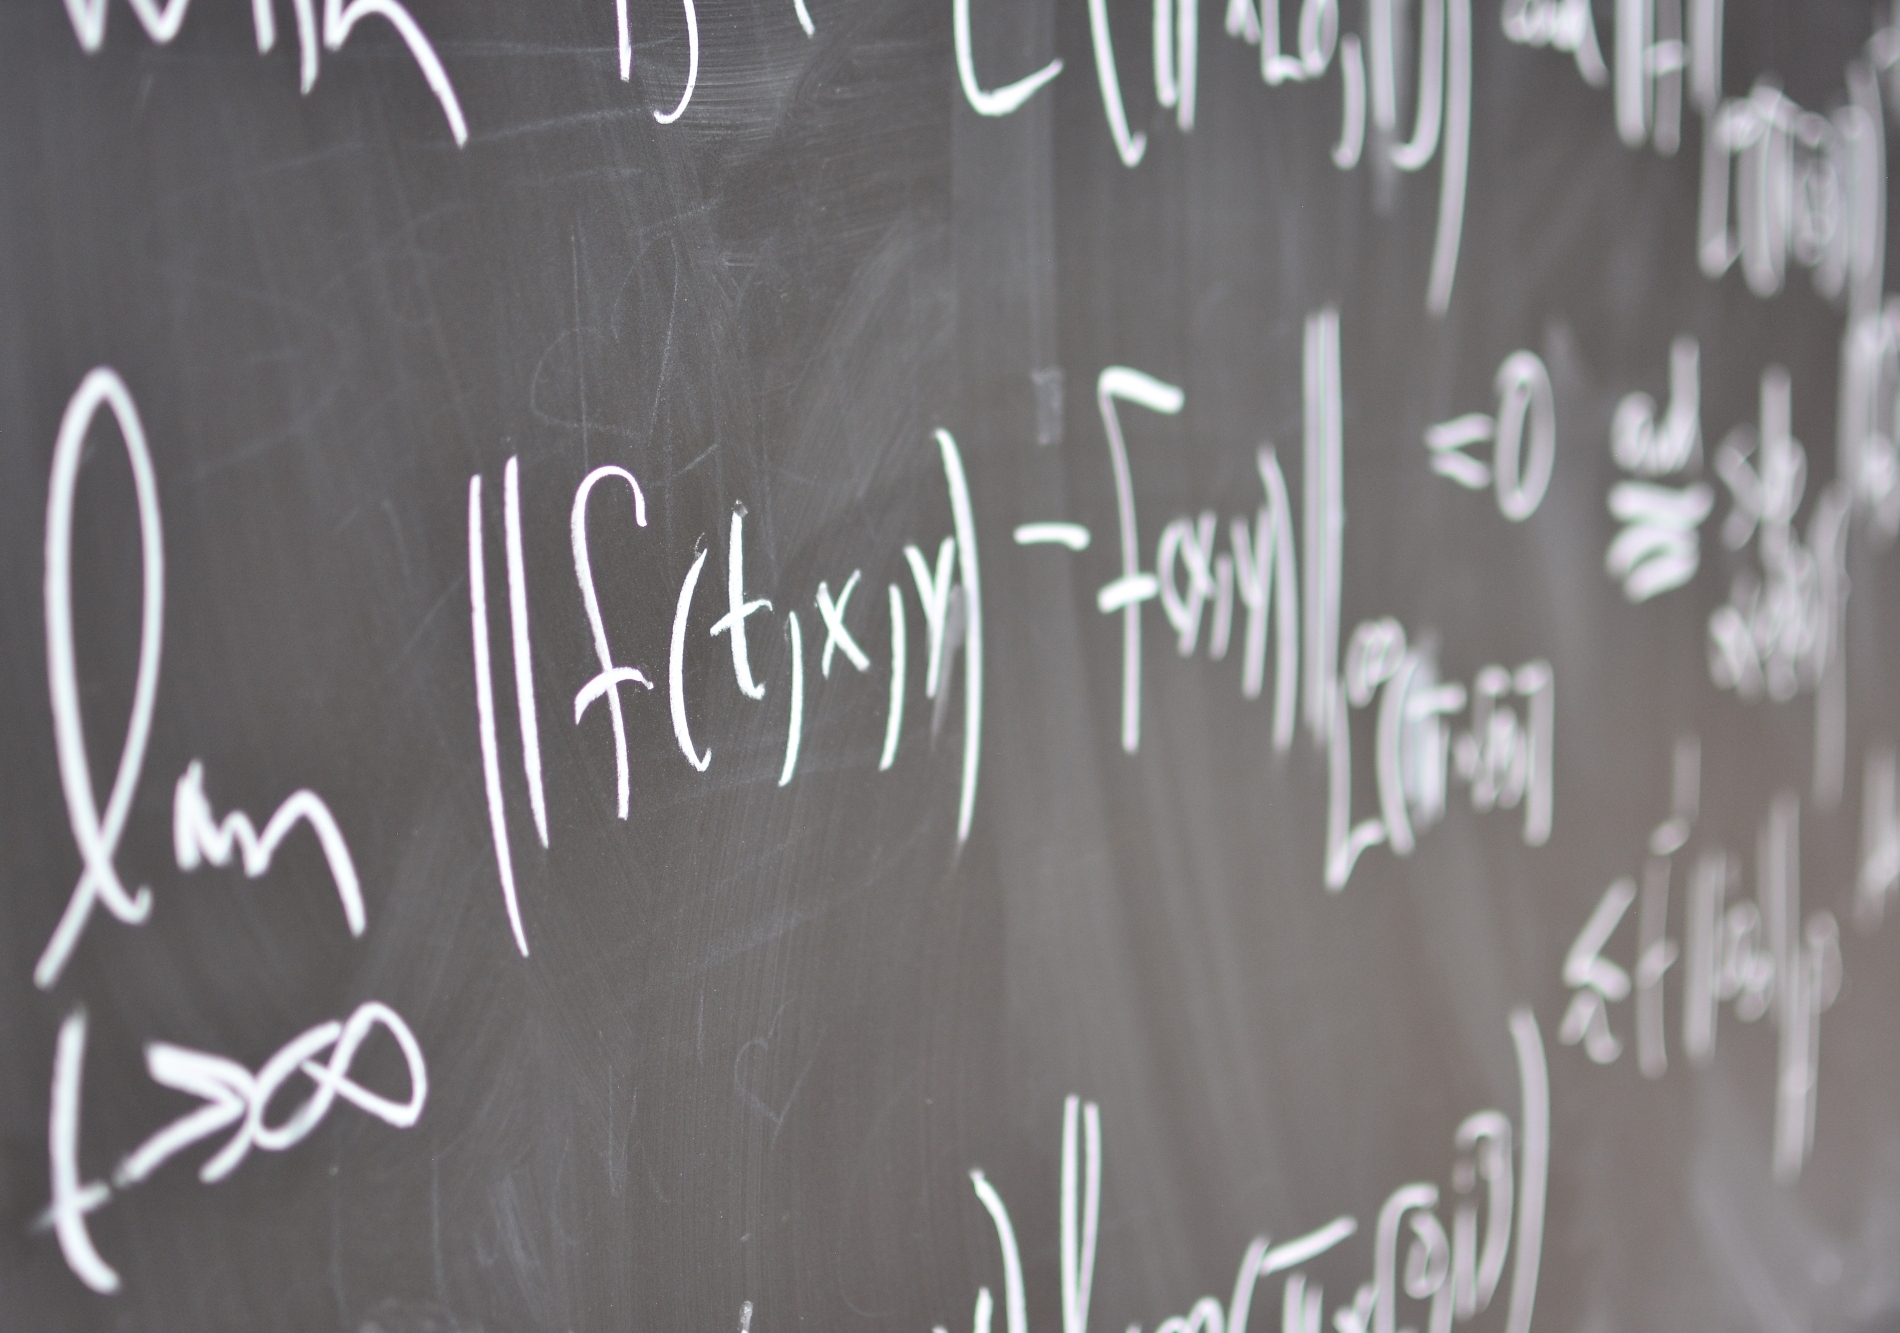 Math on a blackboard